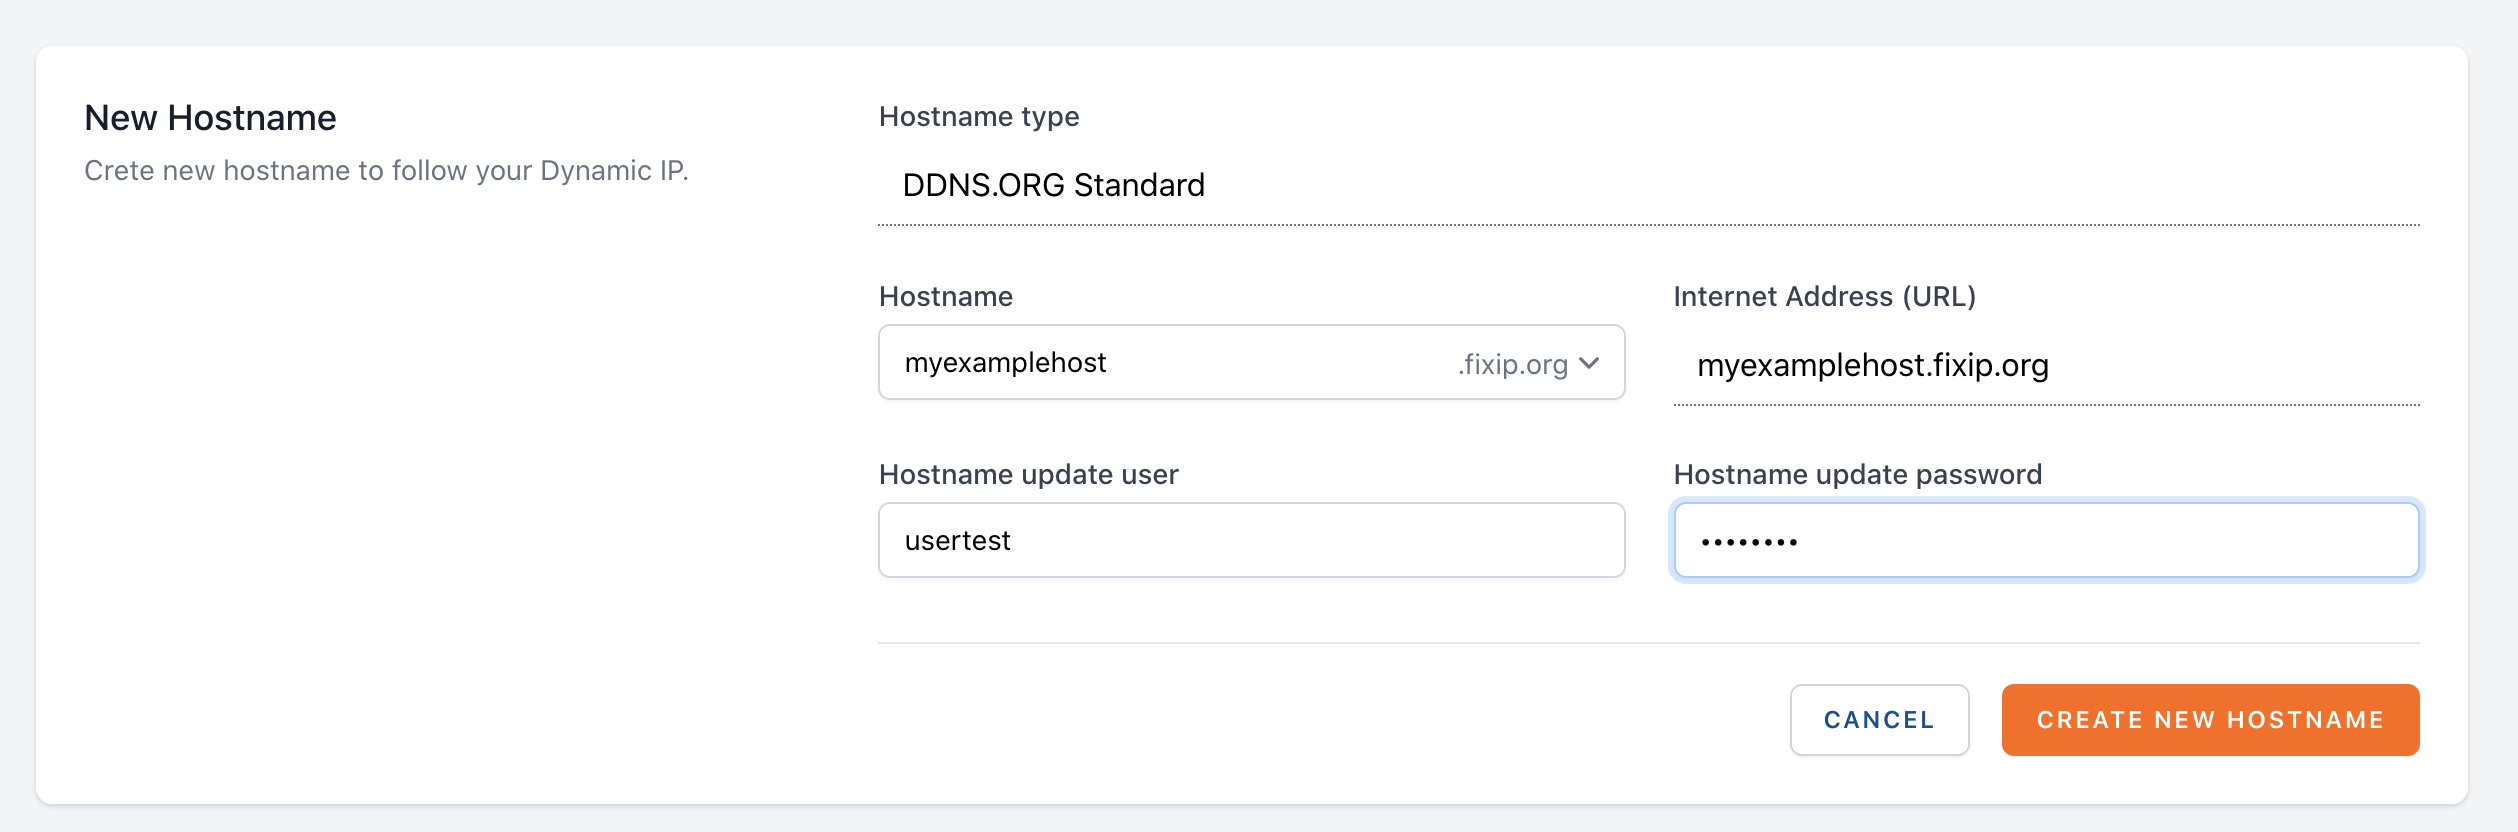 create ddns.org hostname step 2